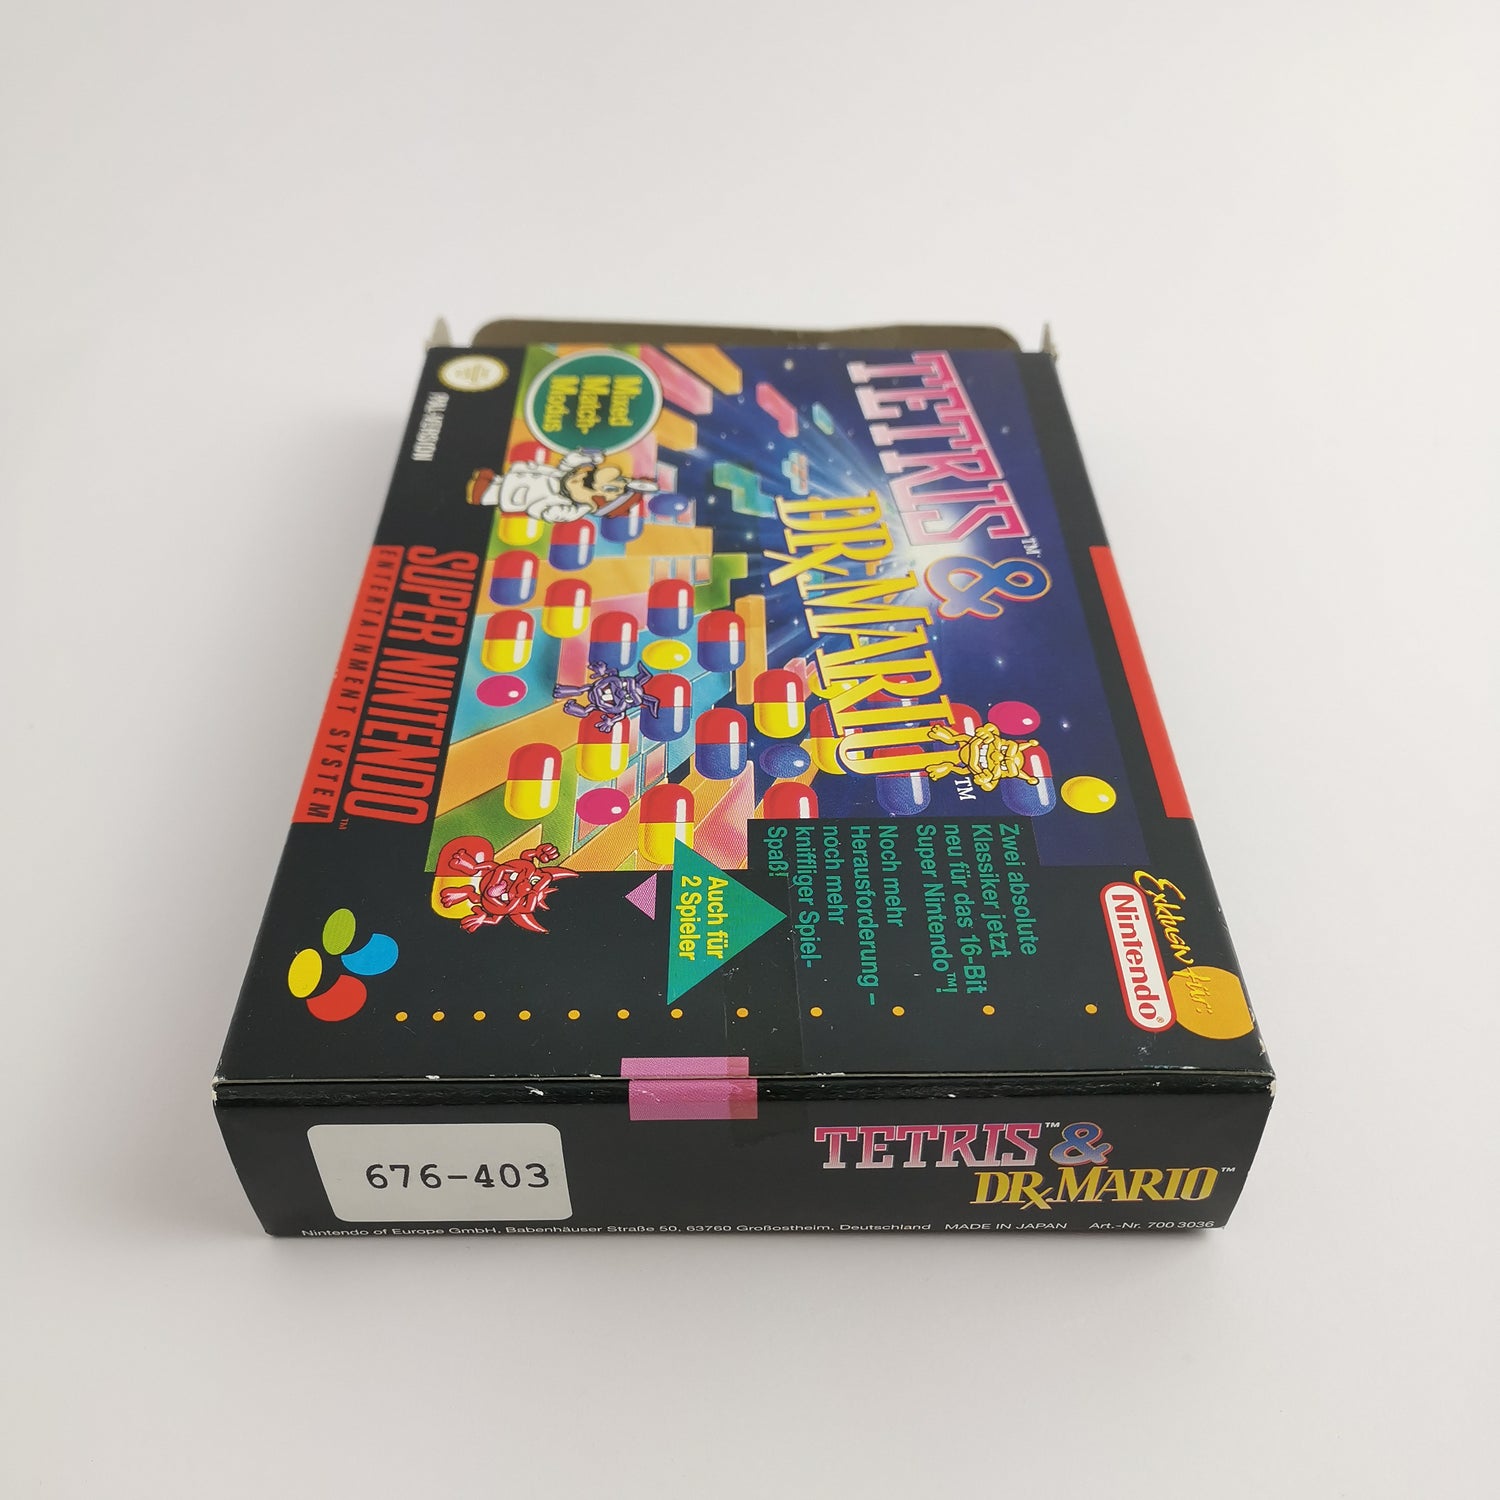 Super Nintendo Game: Tetris & Dr. Mario | SNES Game - OVP PAL version